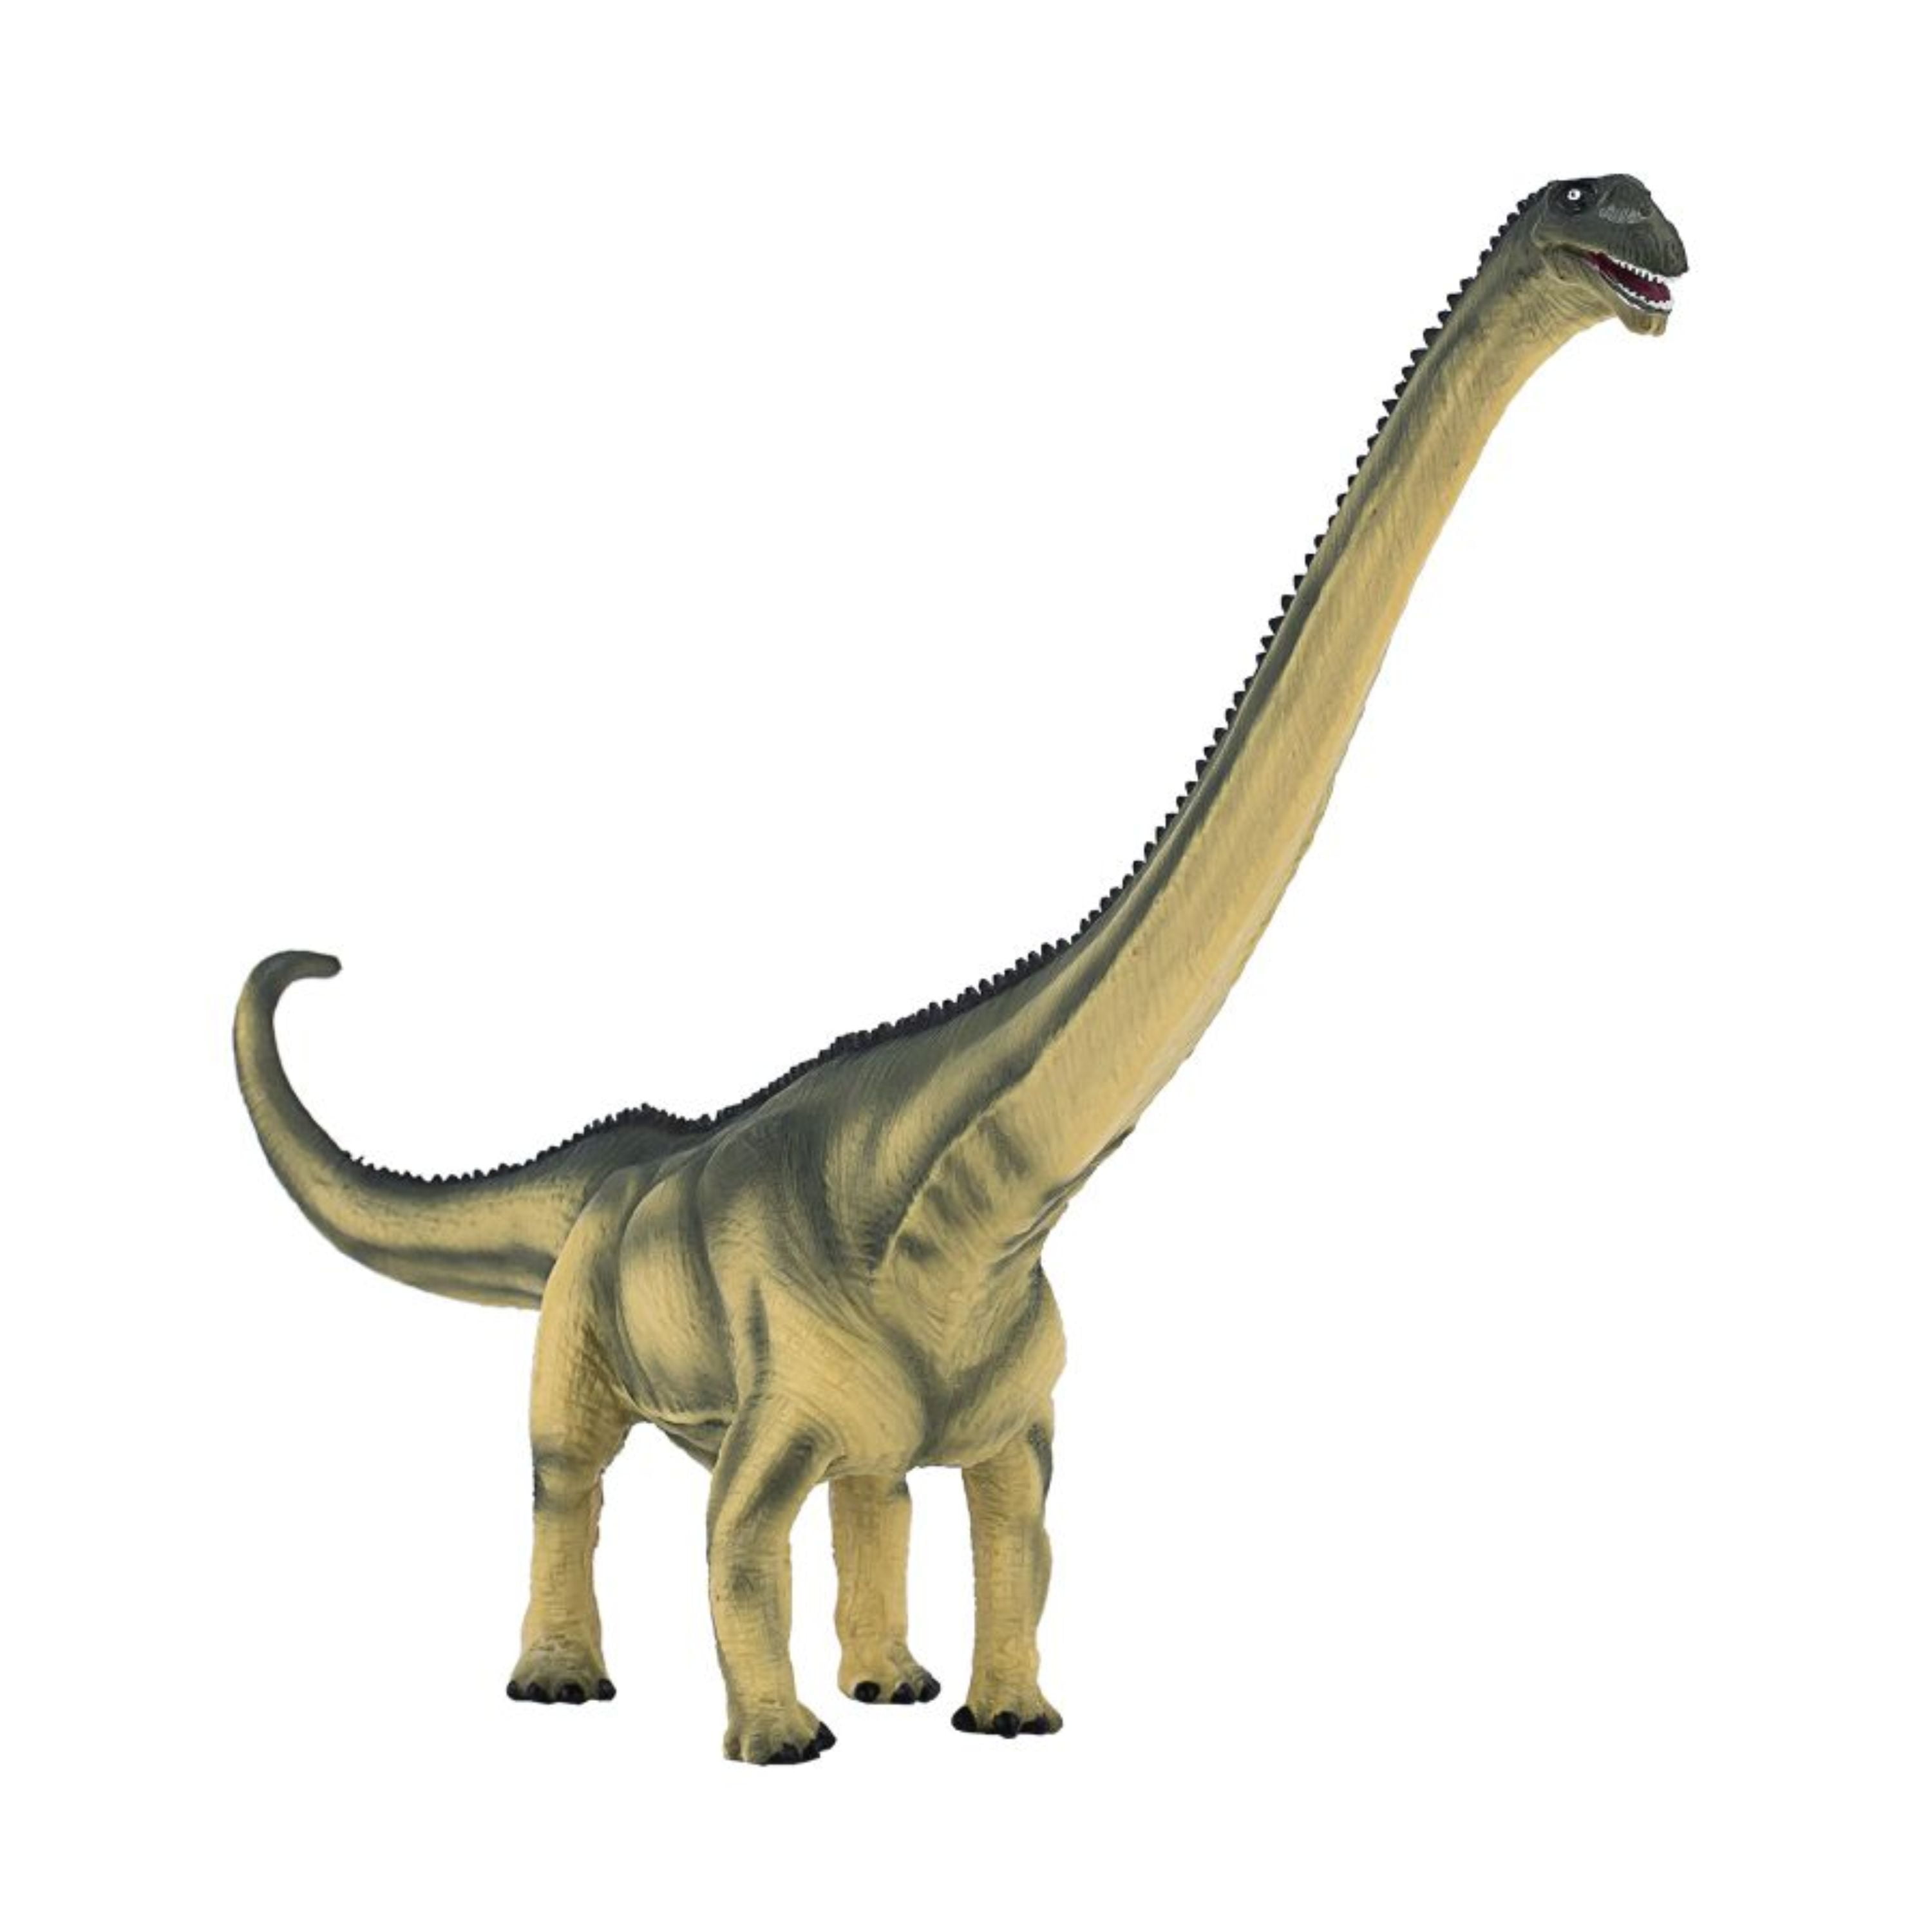 Mojo BRACHIOSAURUS DINOSAUR model figure toy Jurassic prehistoric figurine gift 